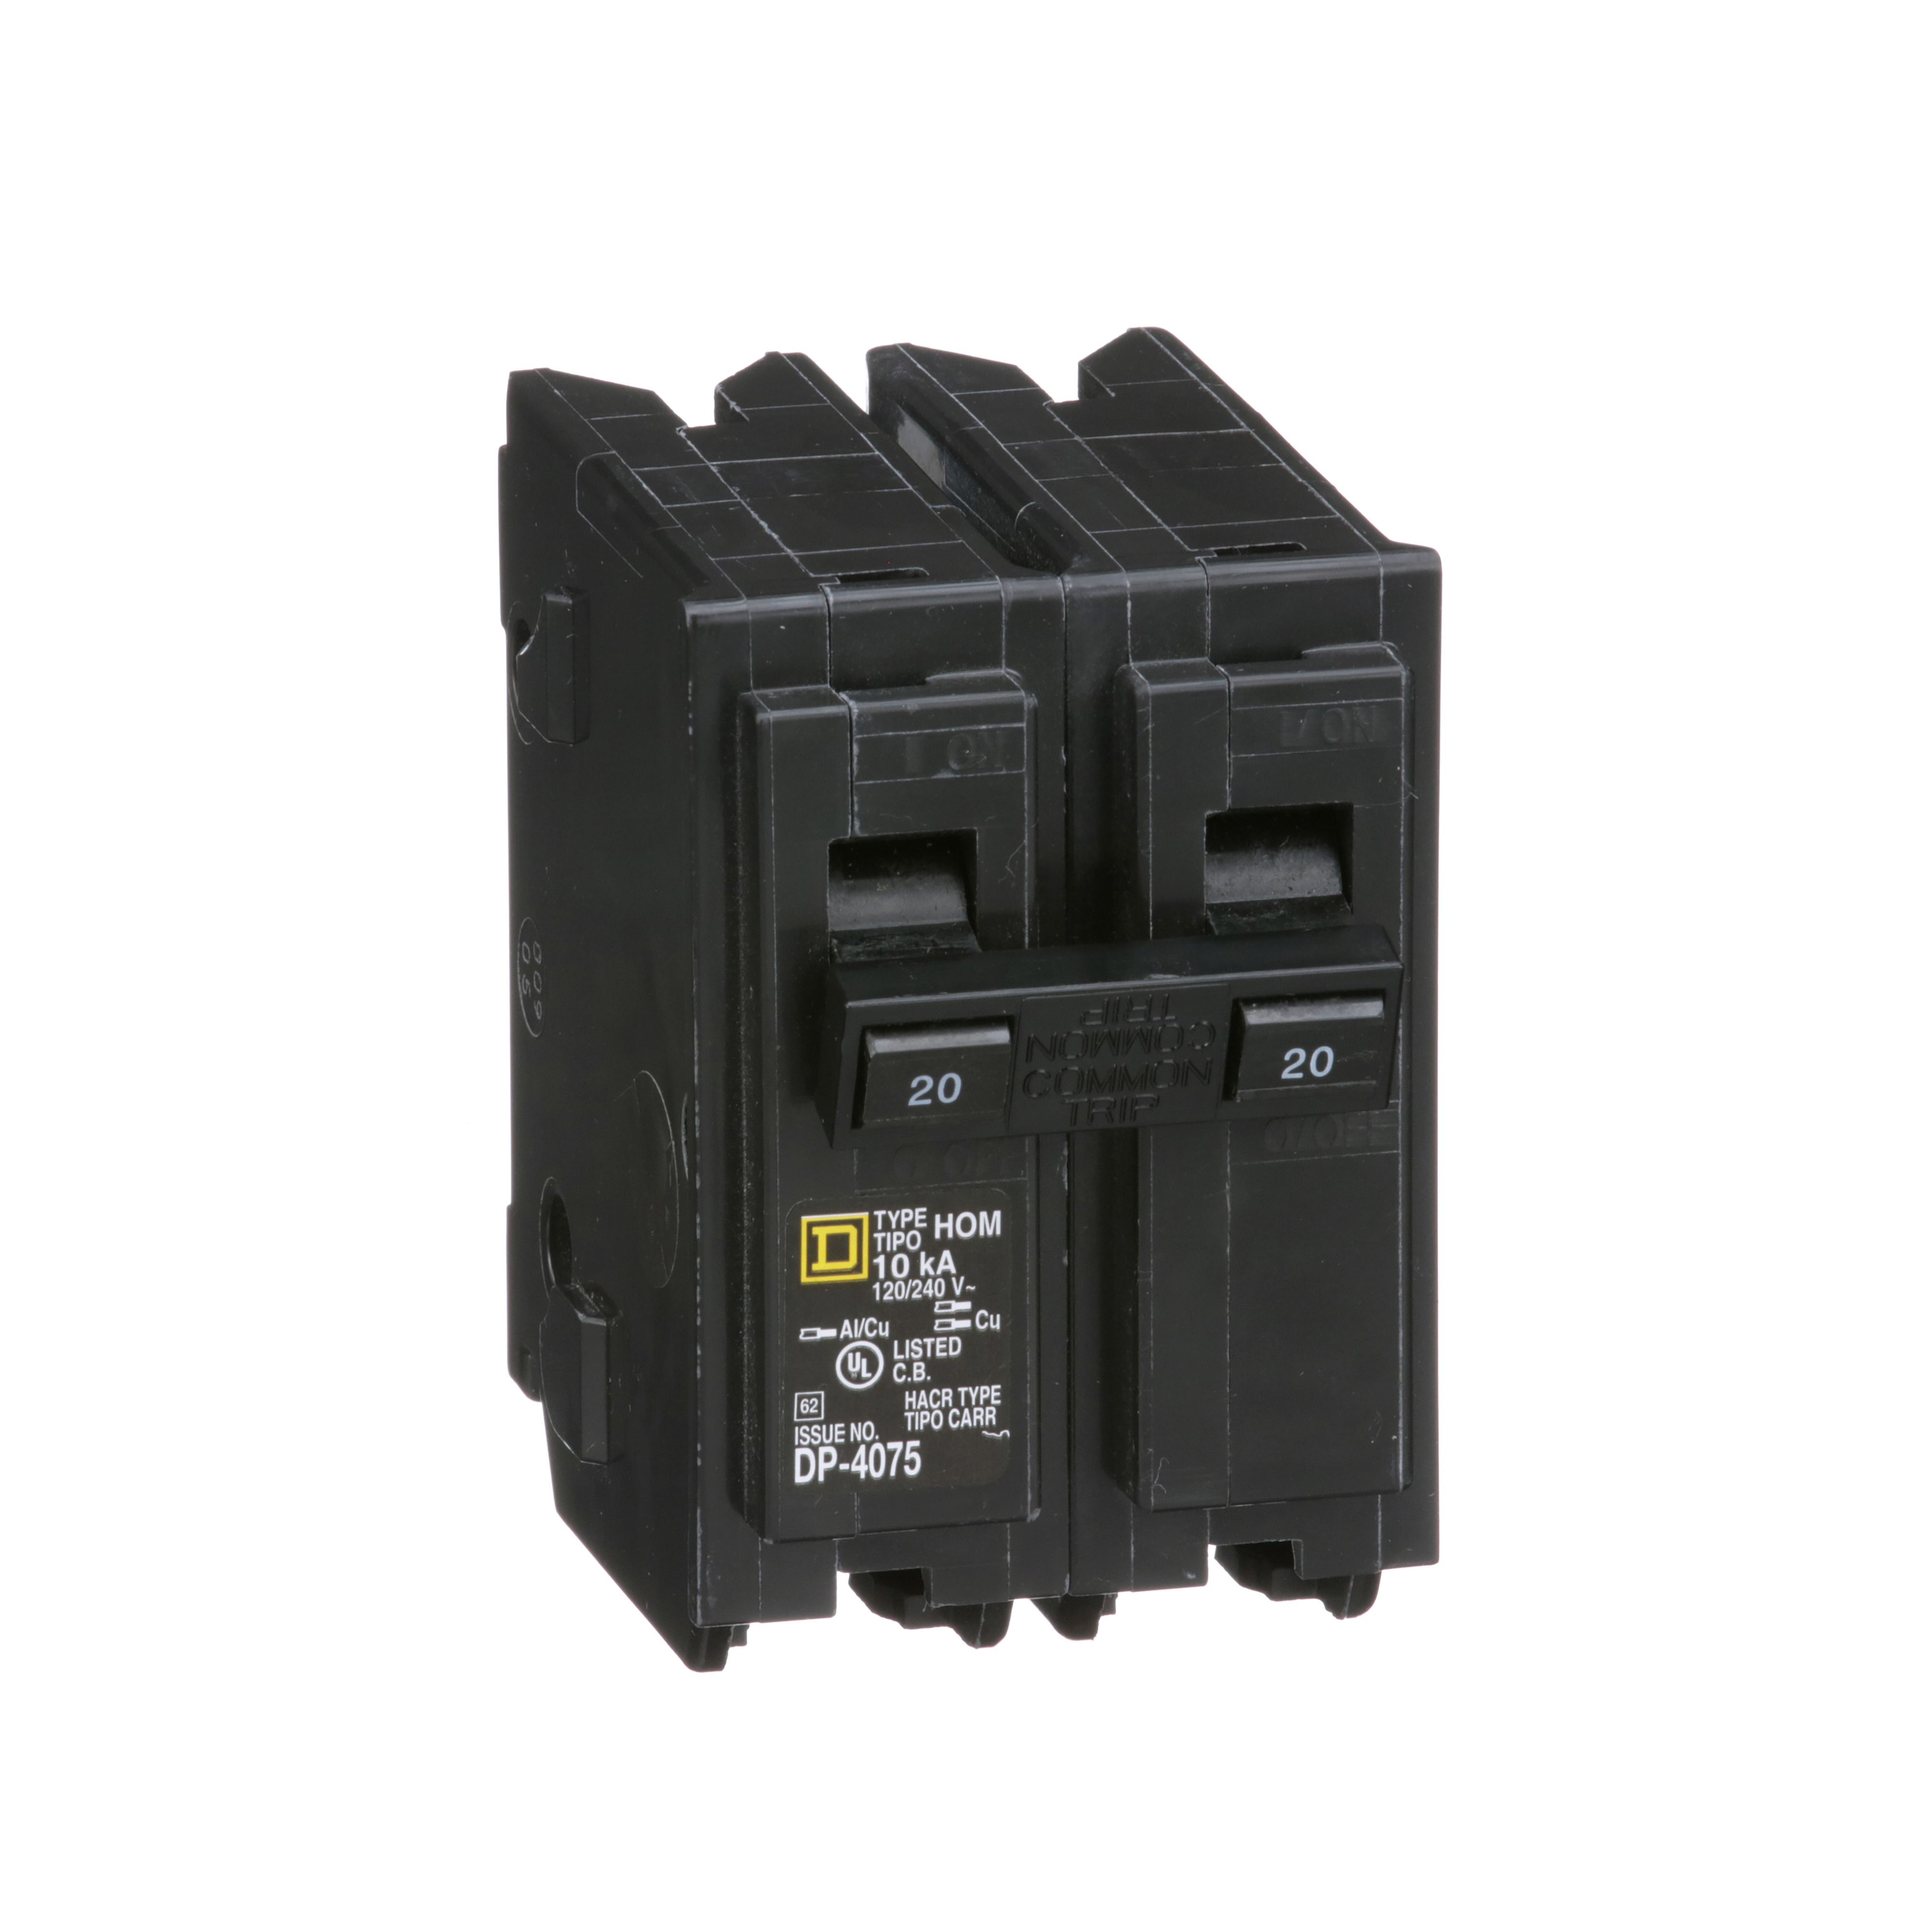 Mini circuit breaker, Homeline, 20A, 2 pole, 120/240VAC, 10kA AIR, standard type, plug in, UL